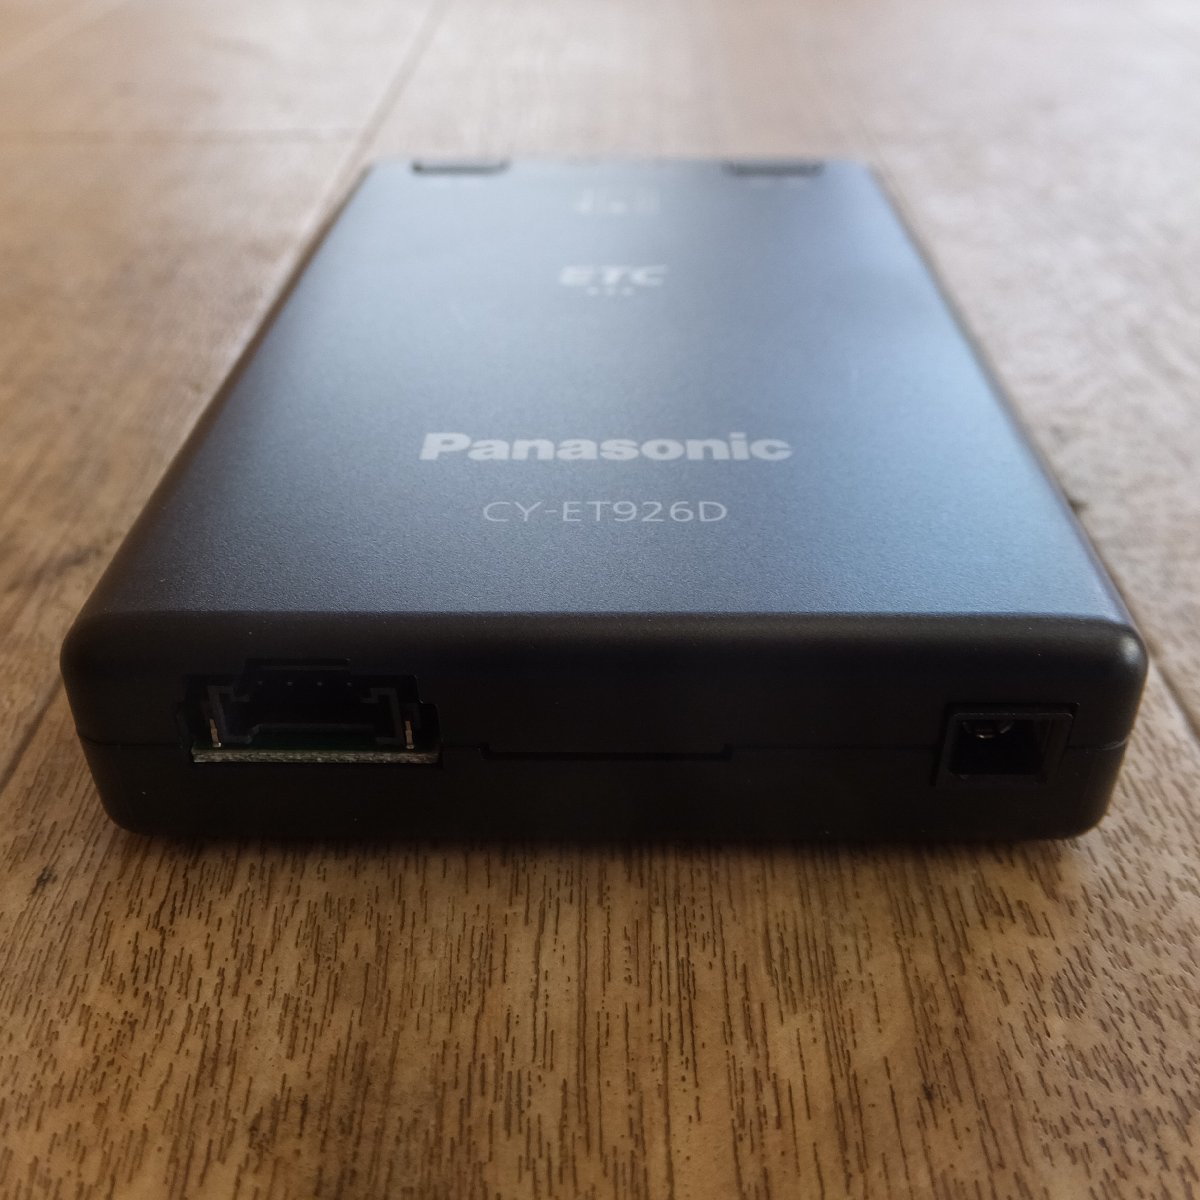  clean * Panasonic Panasonic antenna sectional pattern ETC on-board device CY-ET926D*